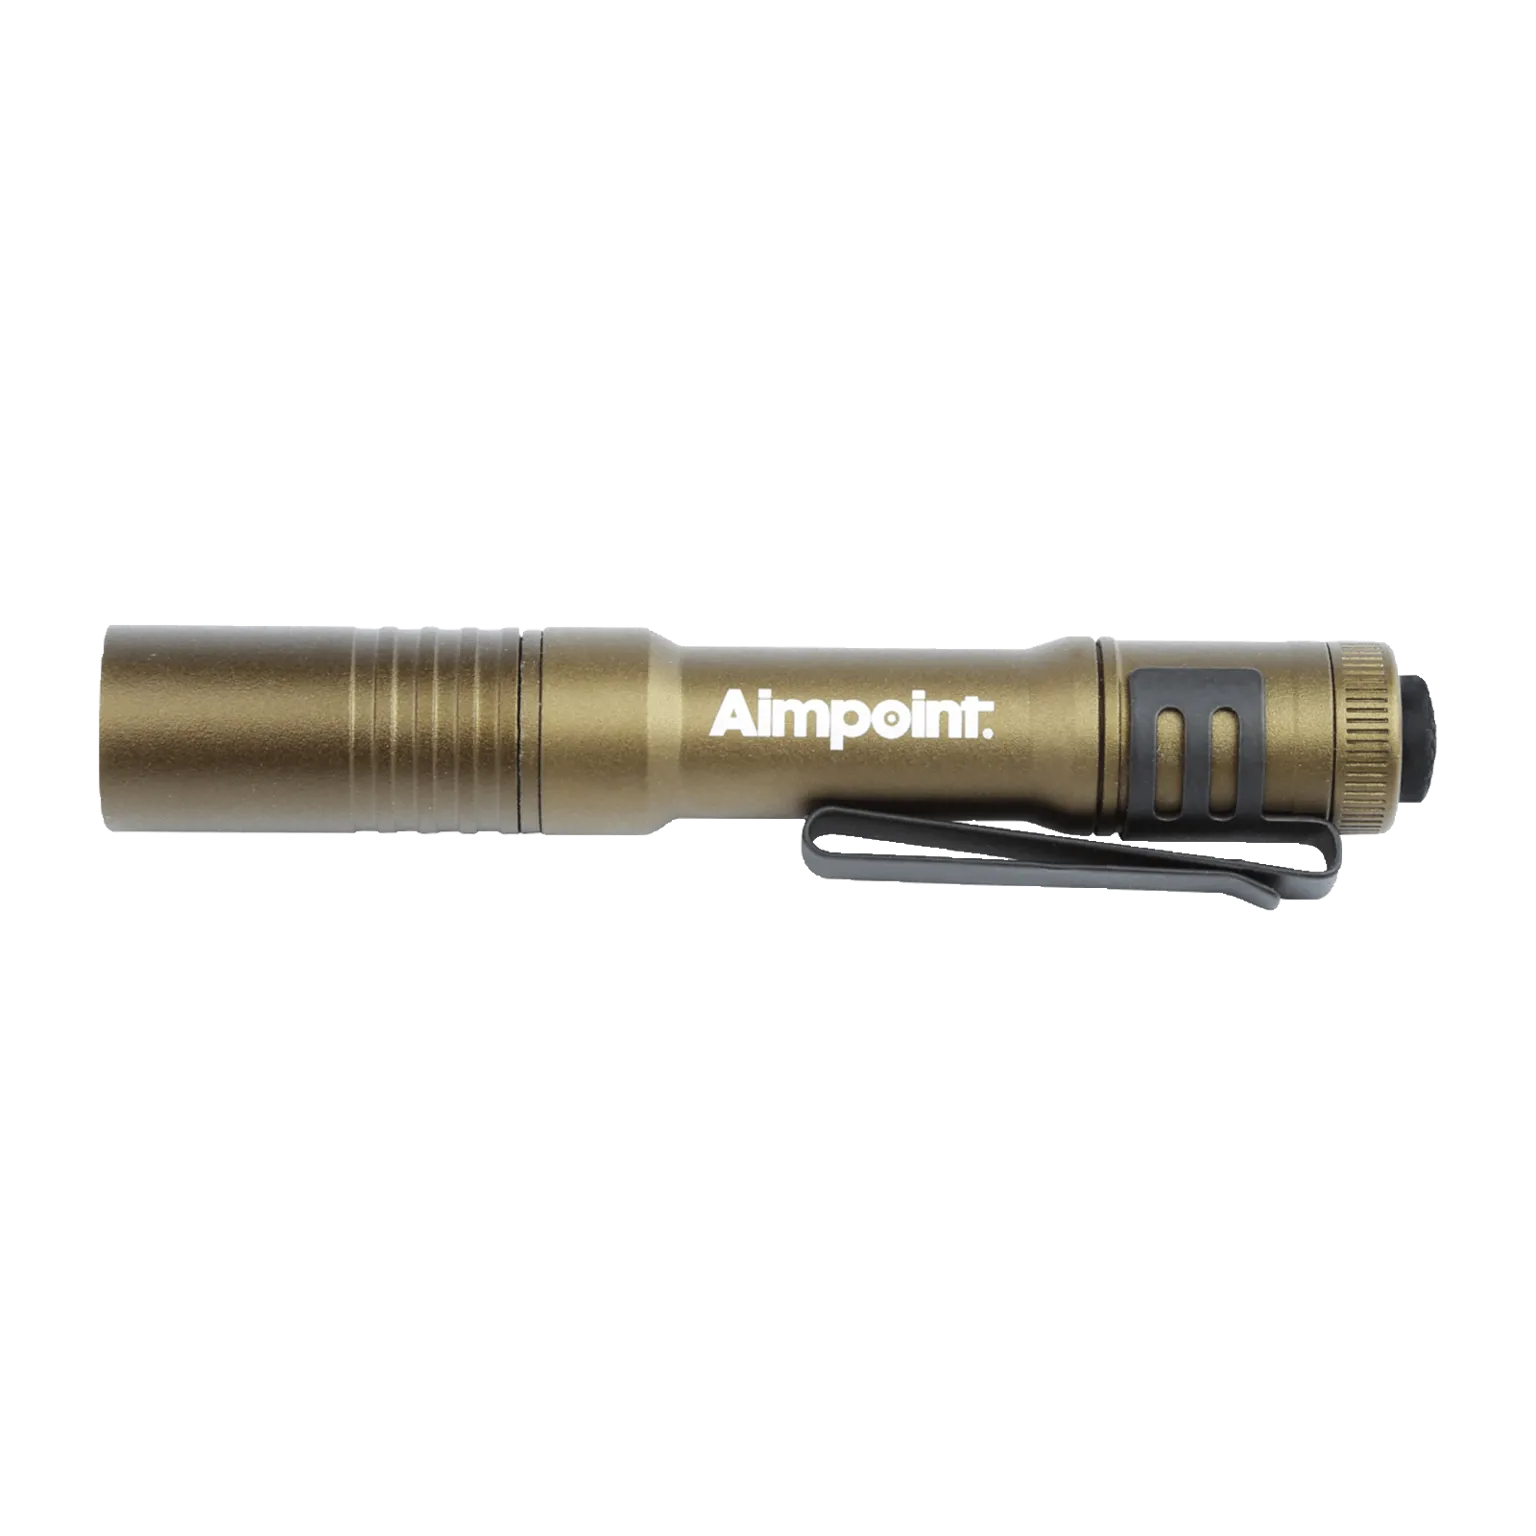 Torche : Streamlight - Marron/beige avec logo Aimpoint®  - 2